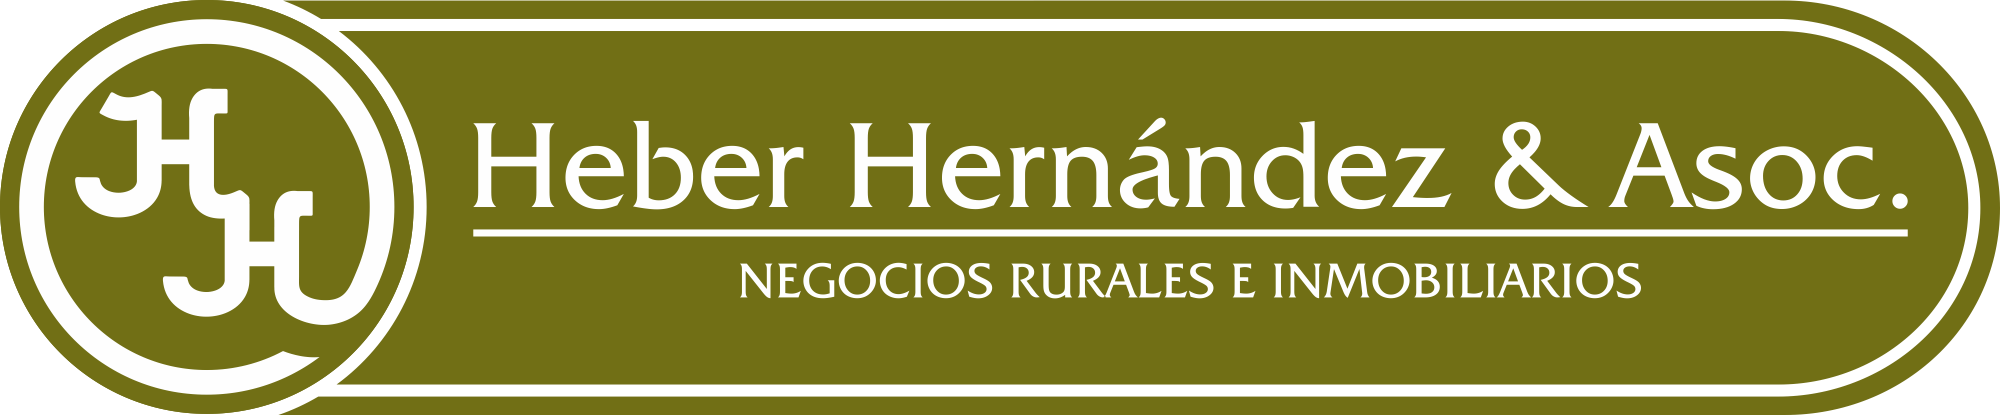 HEBER HERNANDEZ & ASOC.